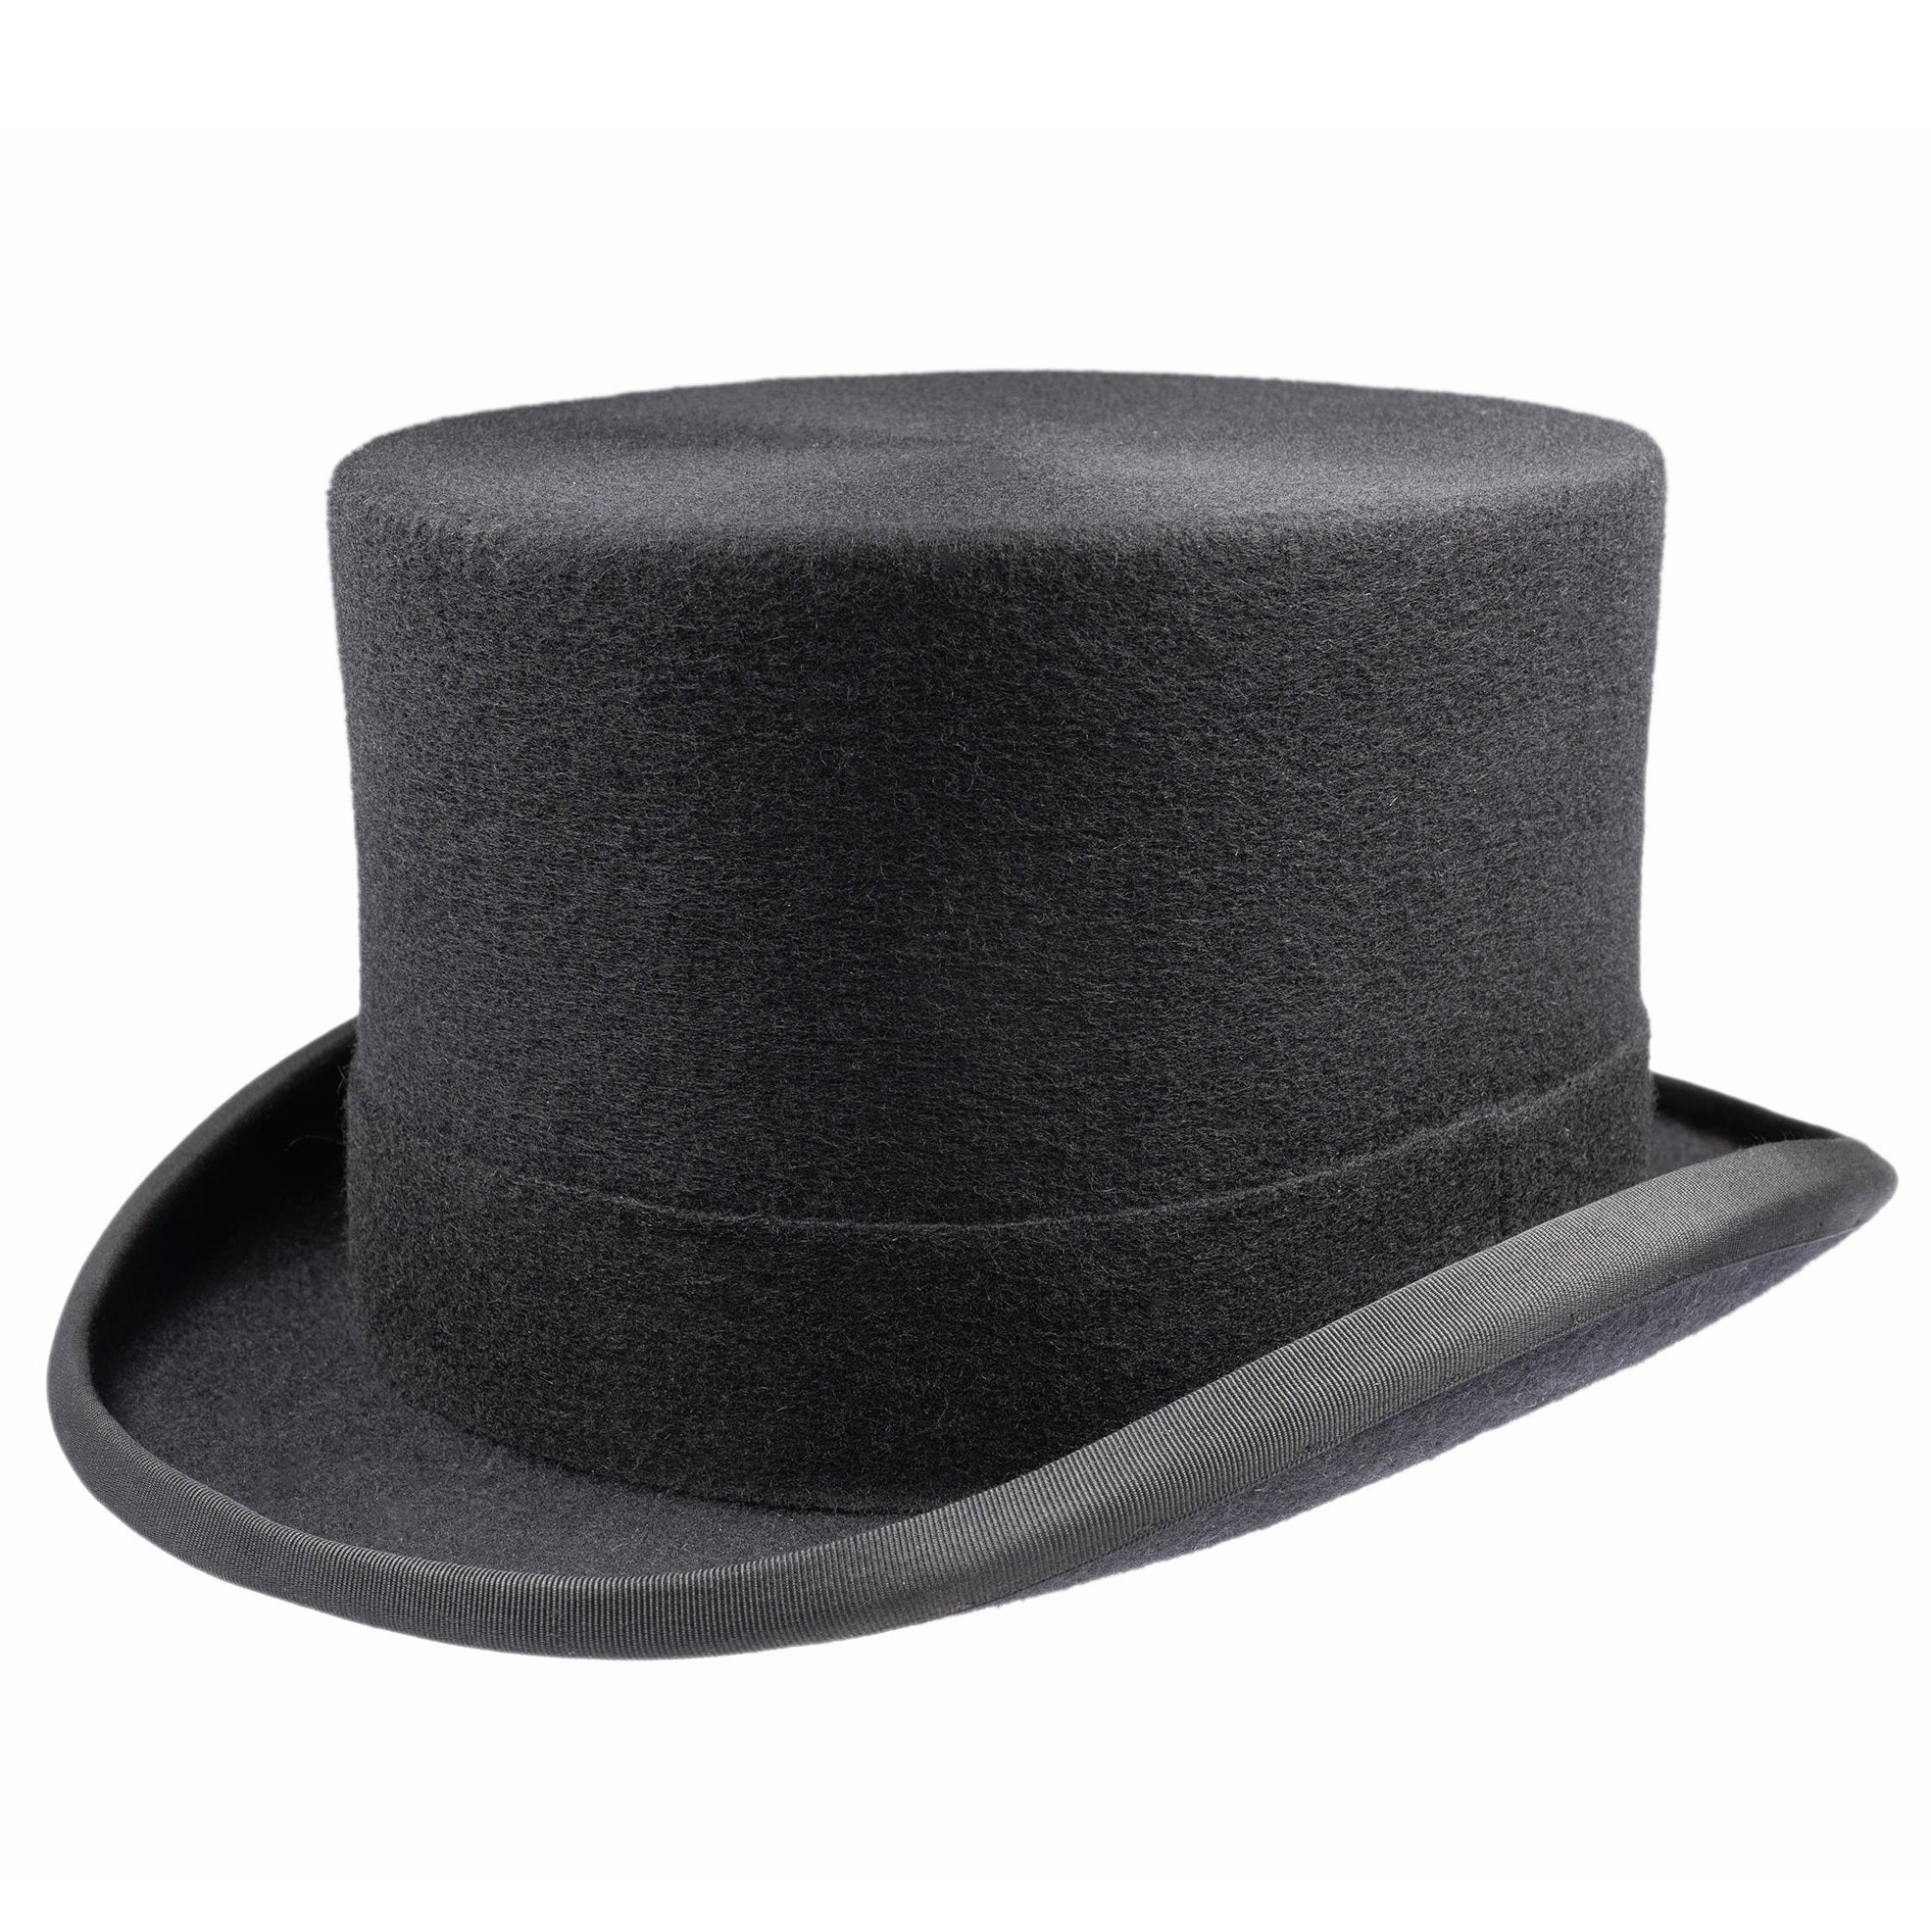 CHRISTYS' Wool Felt Top Hat - Black